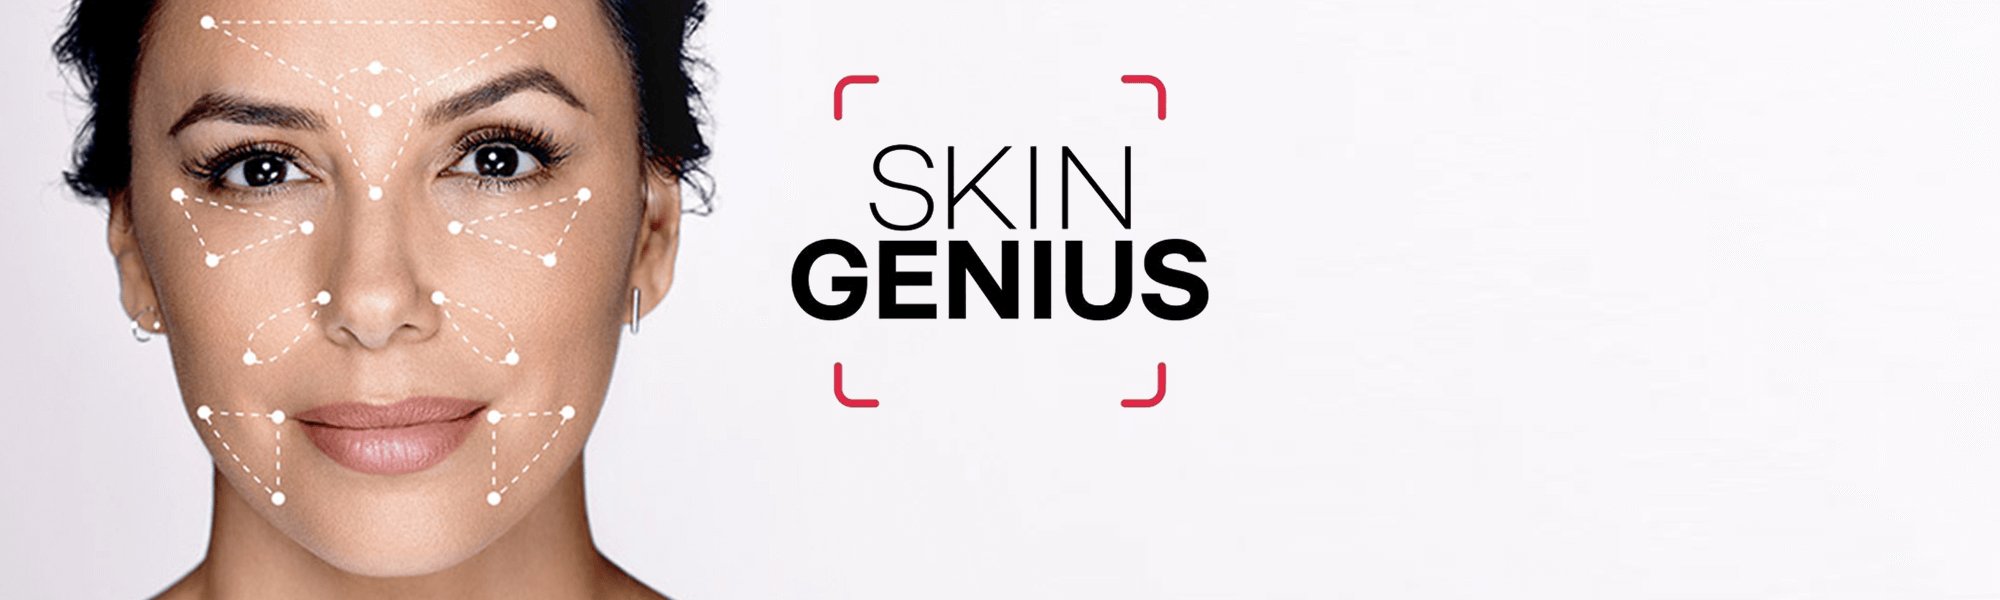 Skin Genius Hero 2